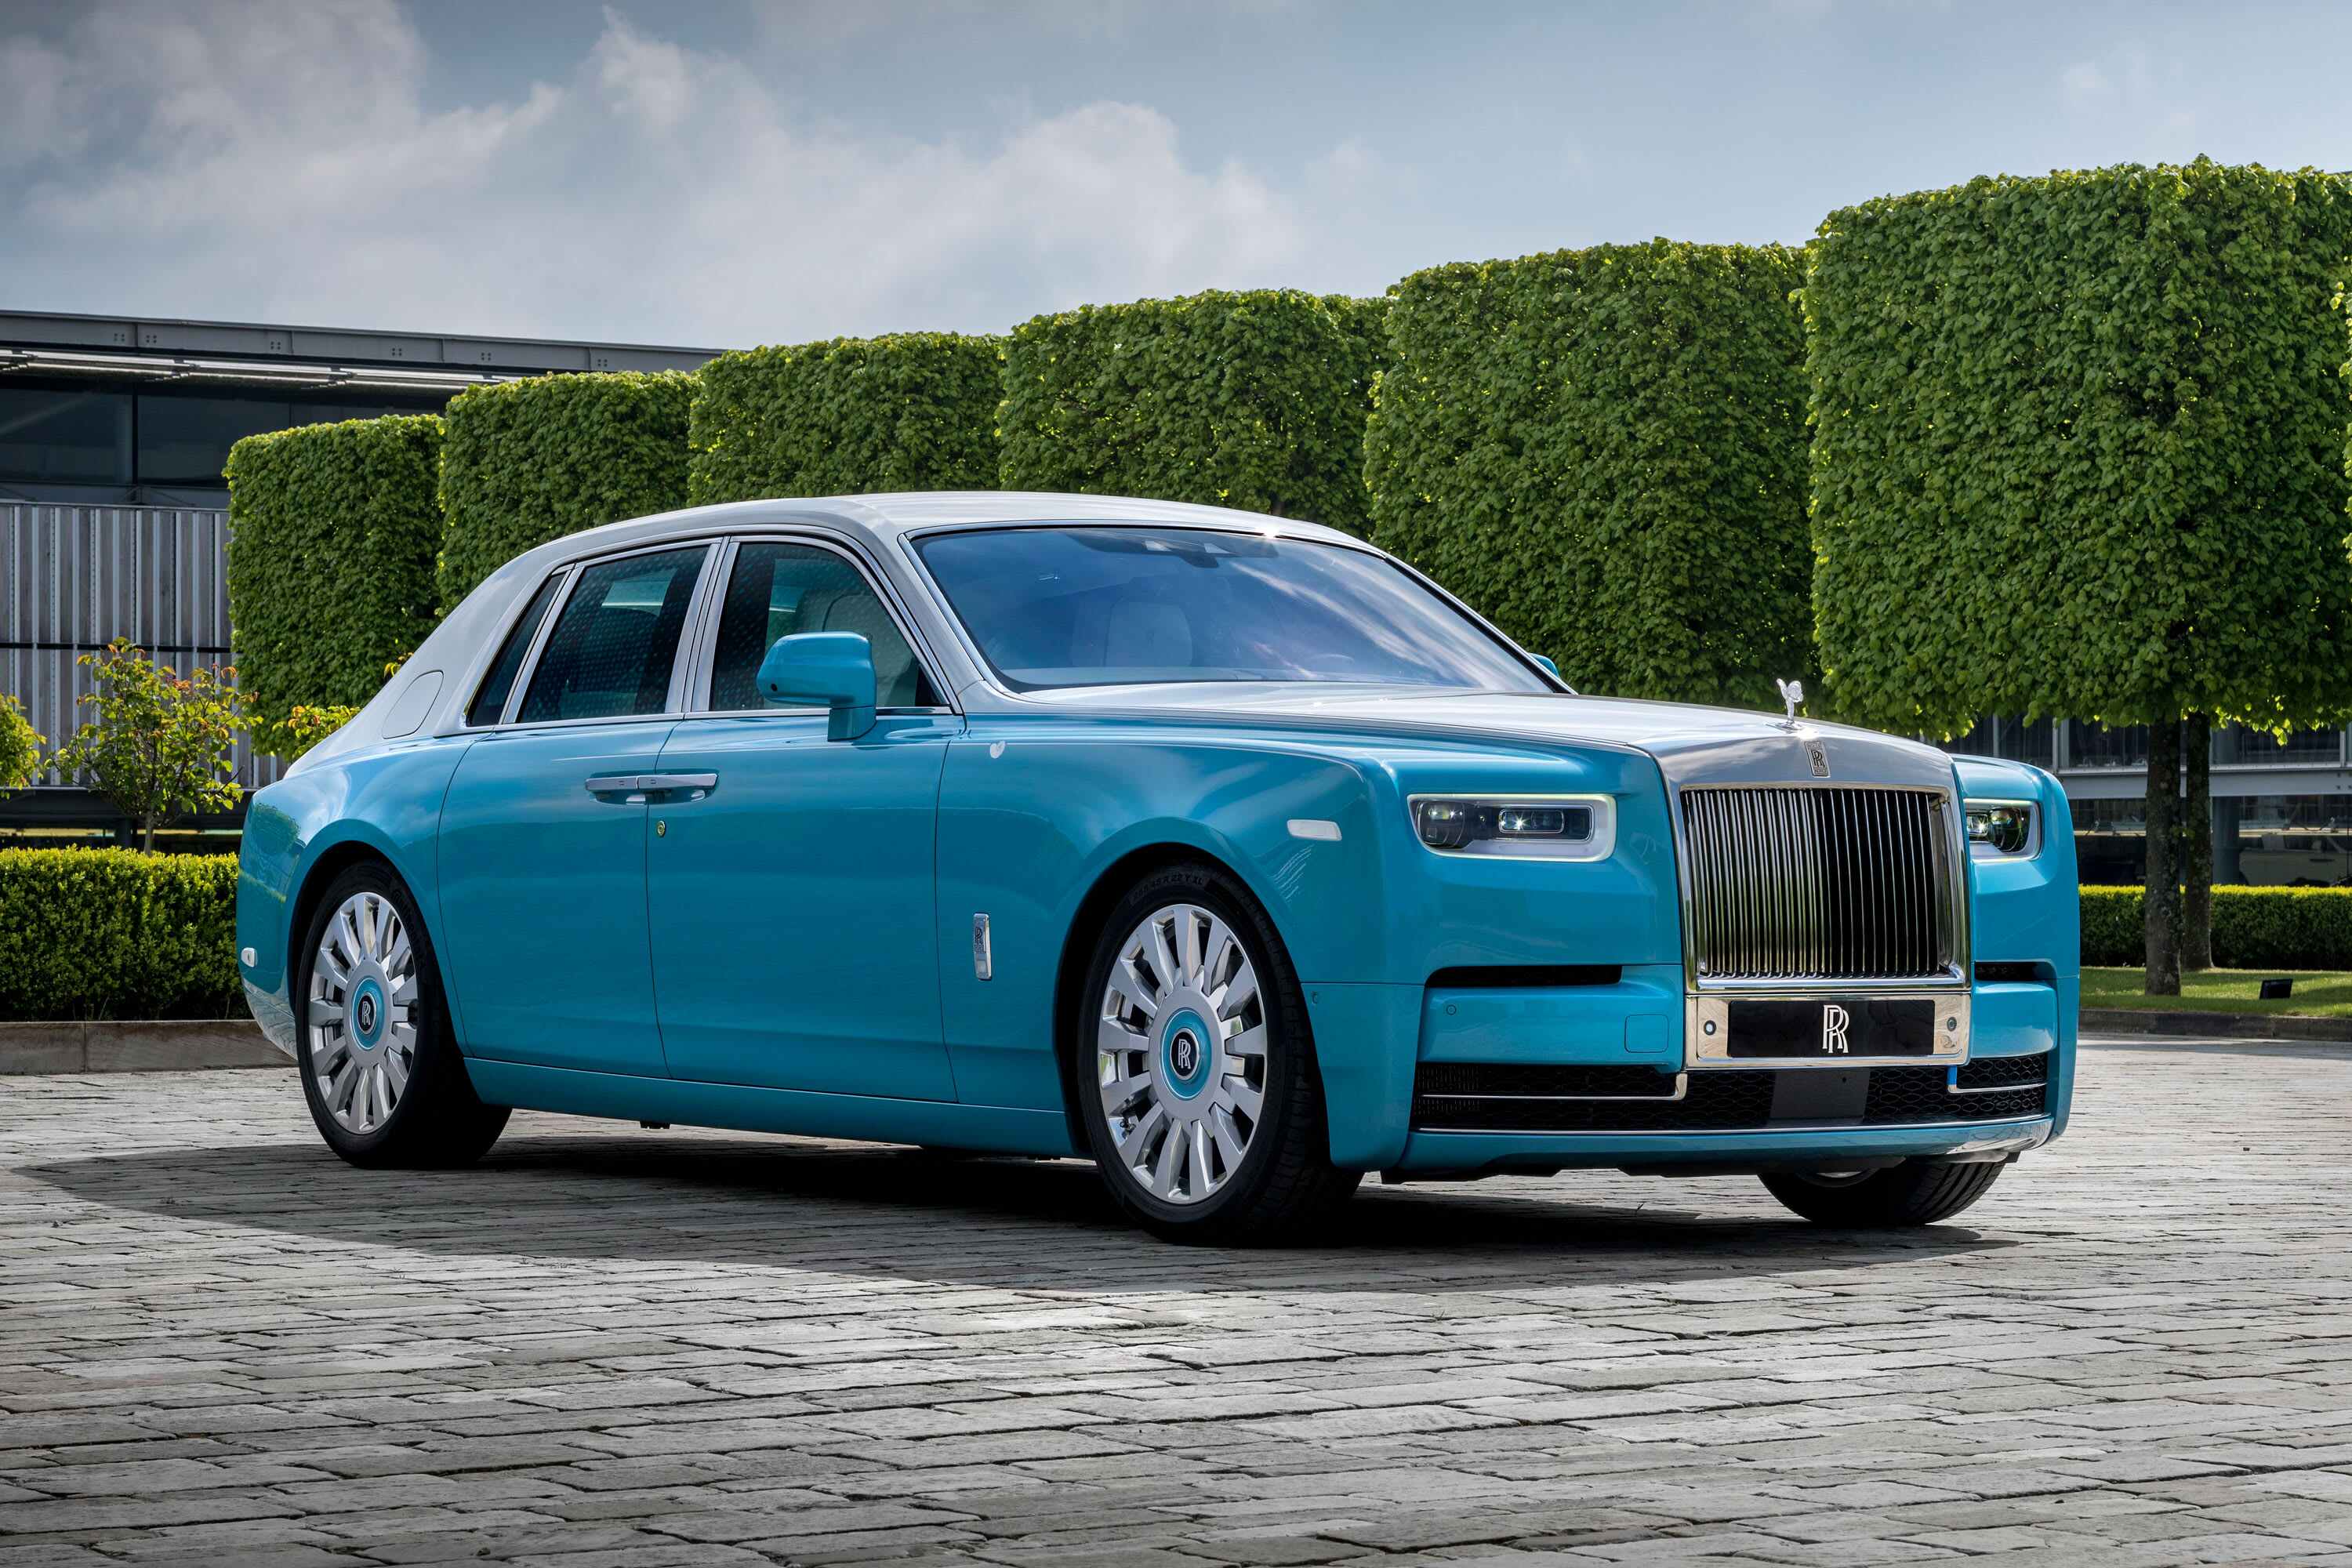 Rolls Royce - Cars Nigerian billionaires drive - Cheki Nigeria